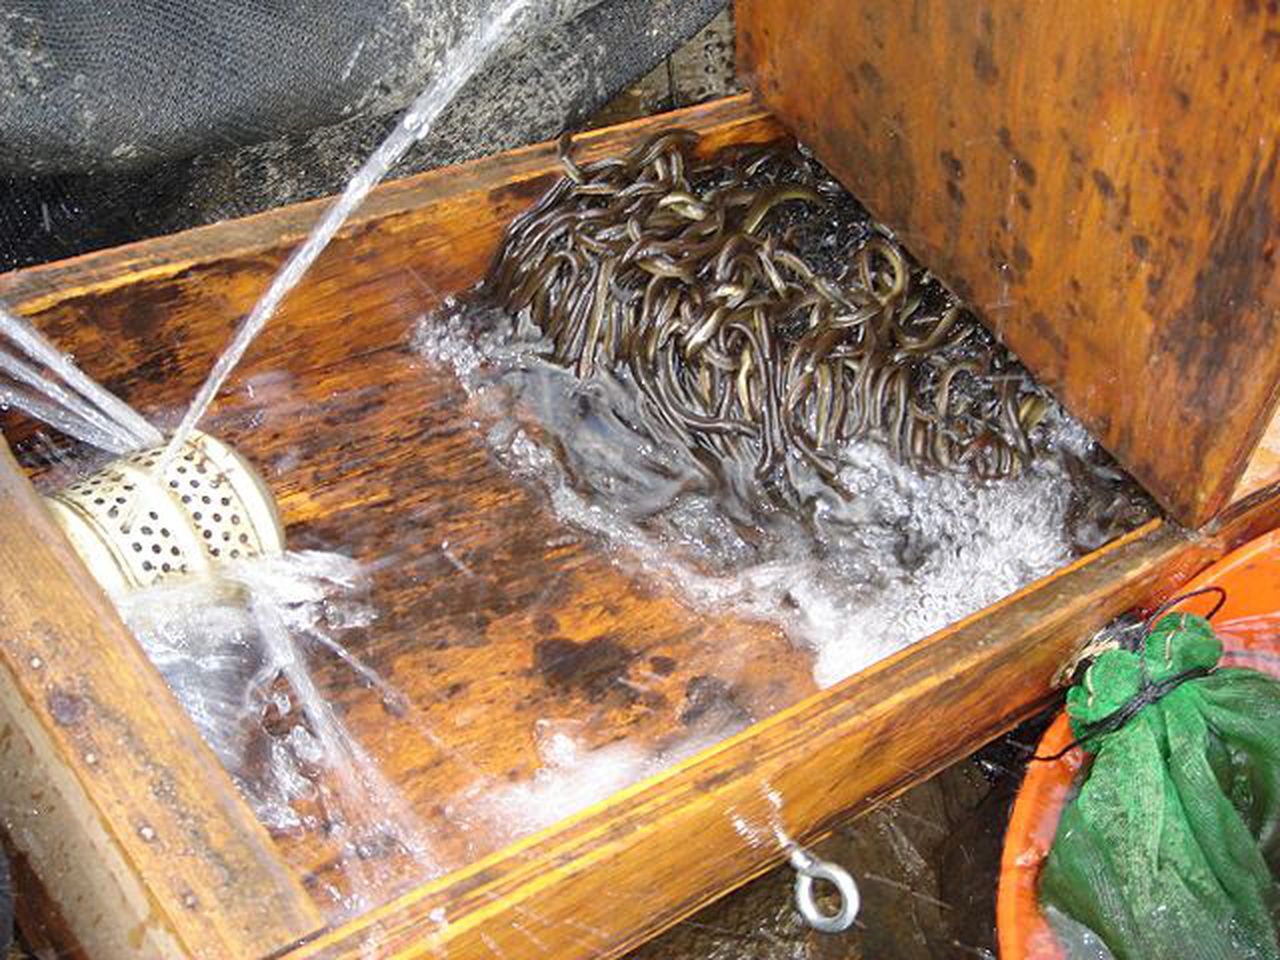 Migrating eels help improve water quality.